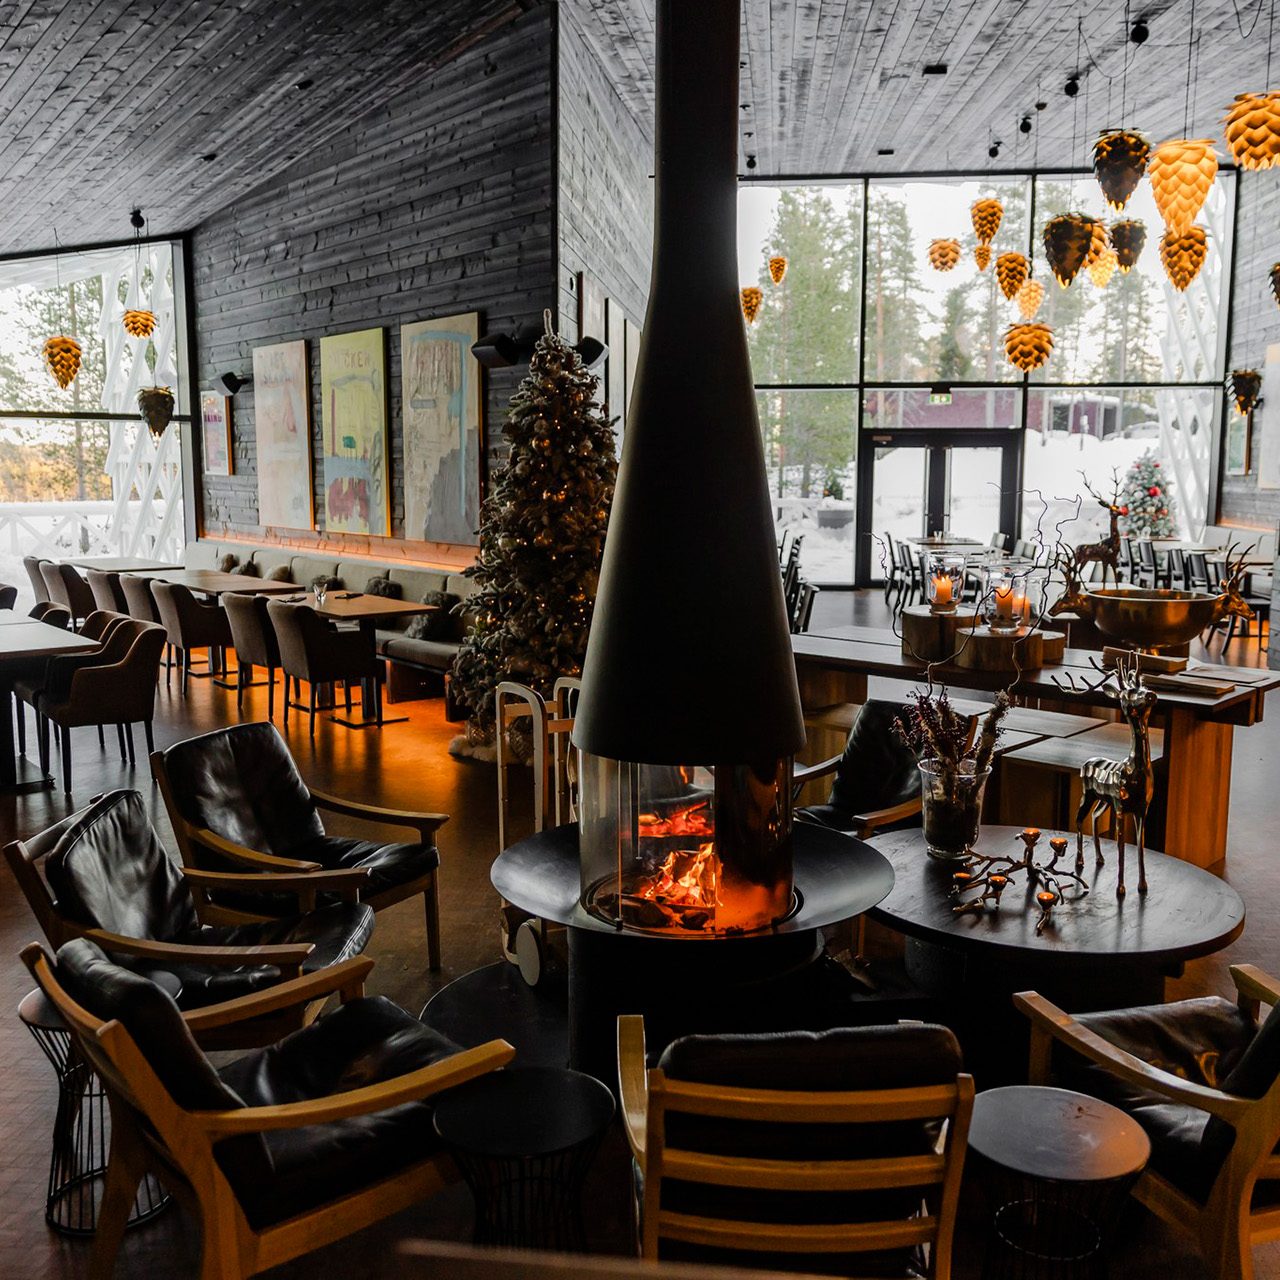 Rakas restaurant with fireplace.